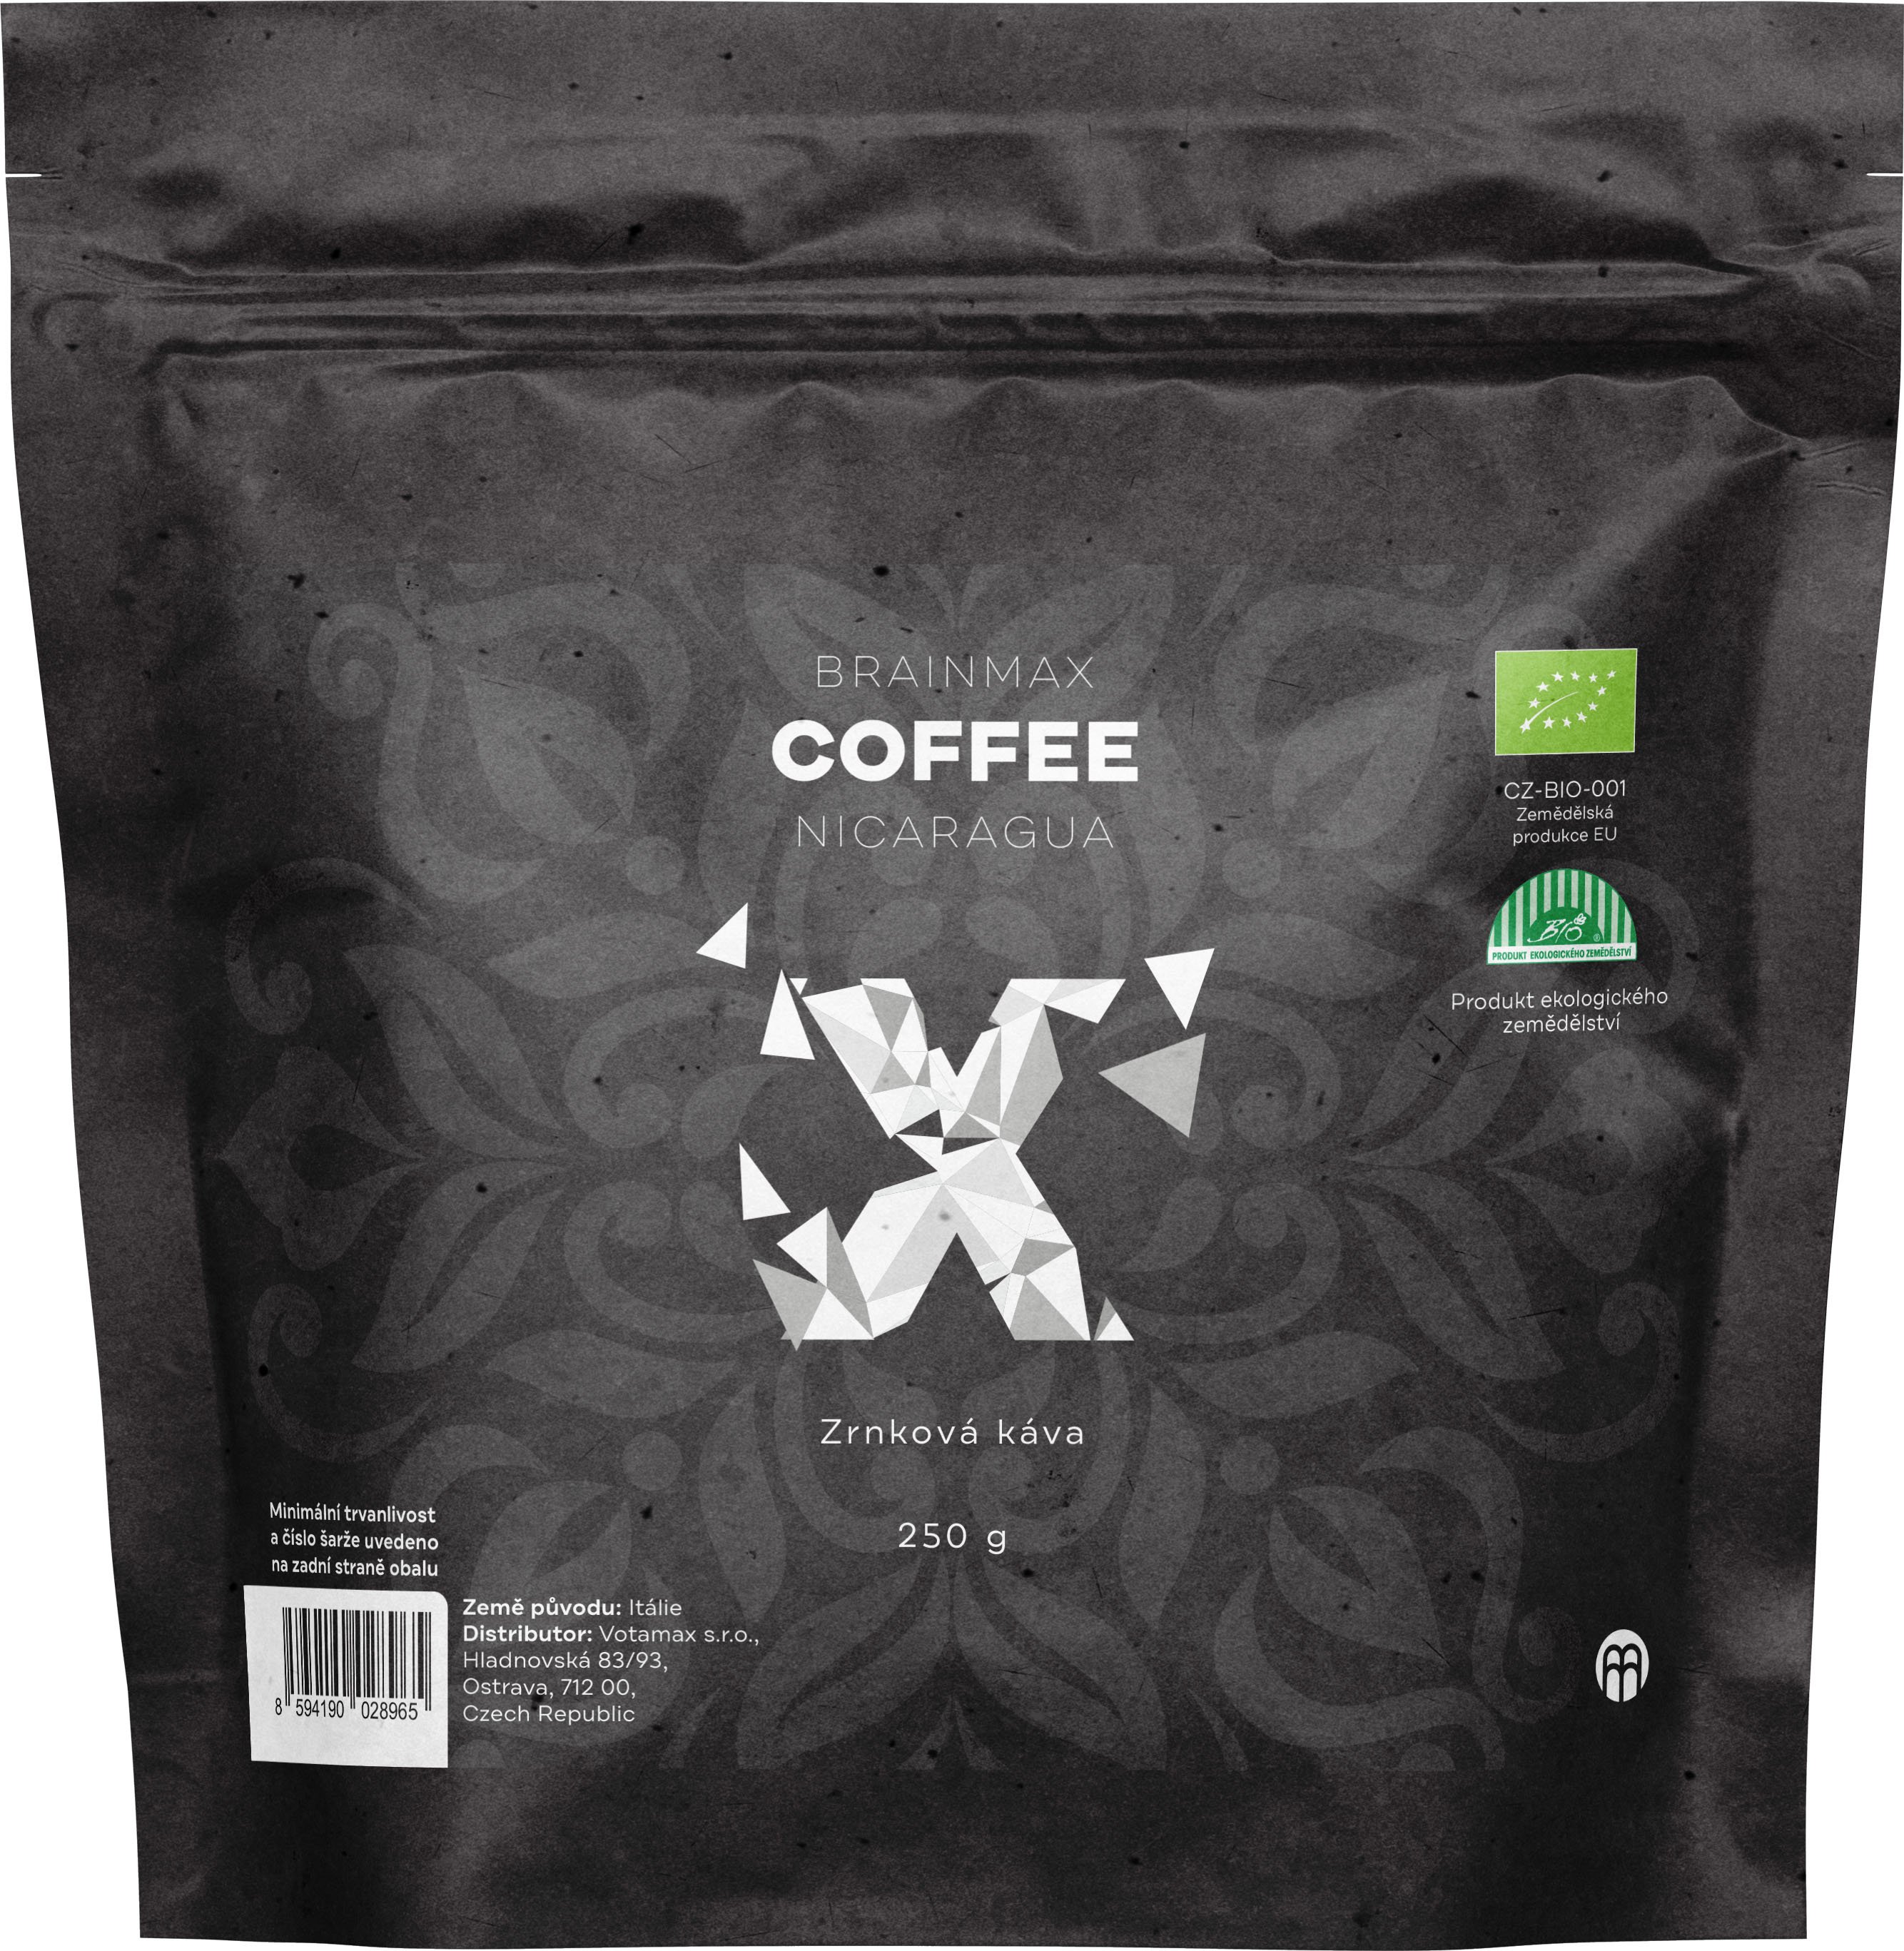 Levně BrainMax Coffee Nicaragua, zrnková káva, BIO, 250 g *CZ-BIO-001 certifikát *CZ-BIO-001 certifikát